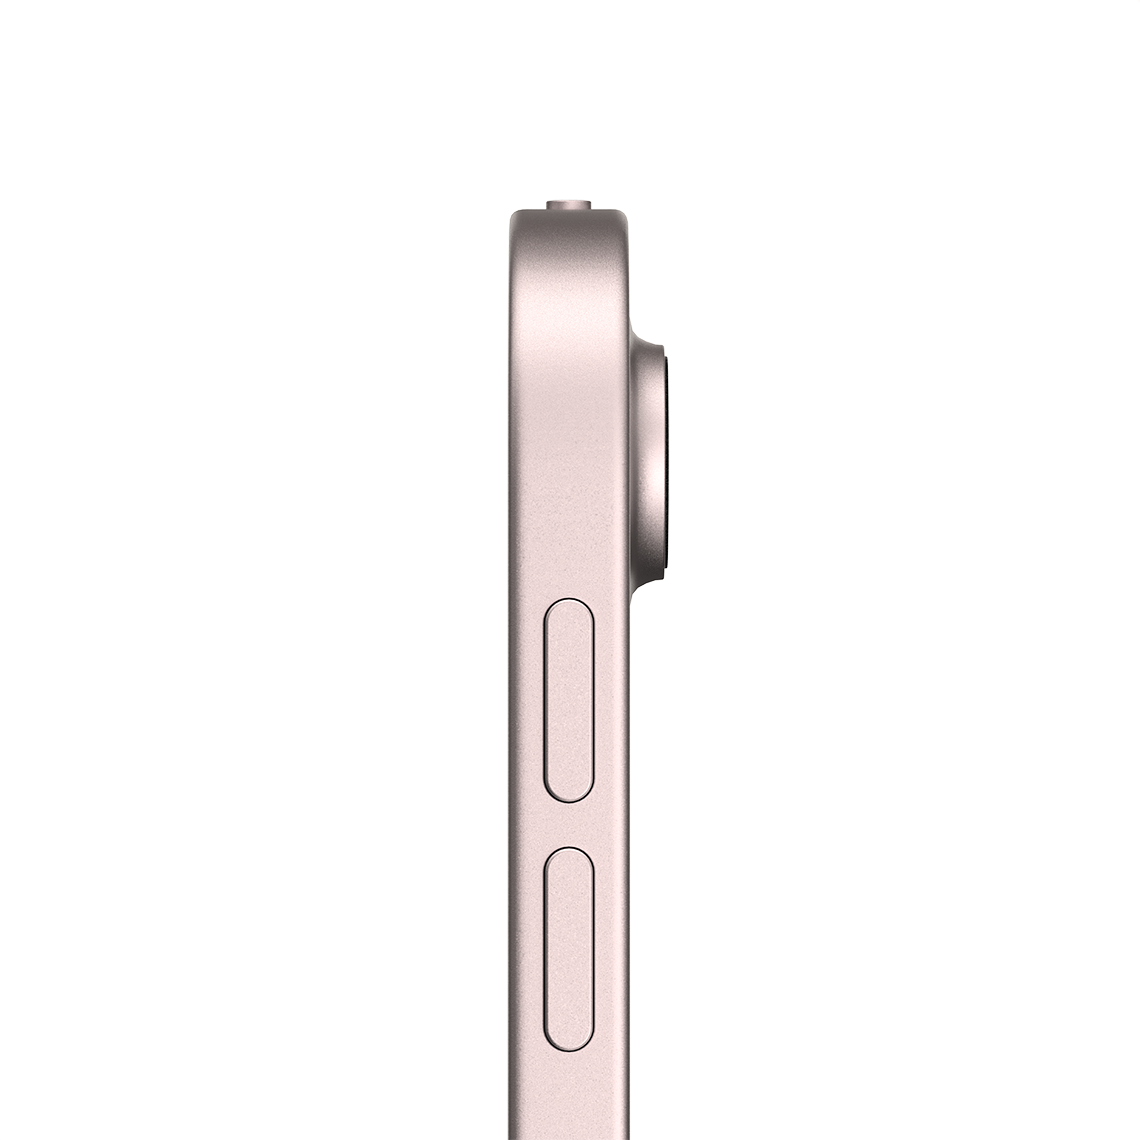 Apple iPad Air 10.9-inch 5th Generation - Pink - 256GB, Wi-Fi + Cellular, Grade A